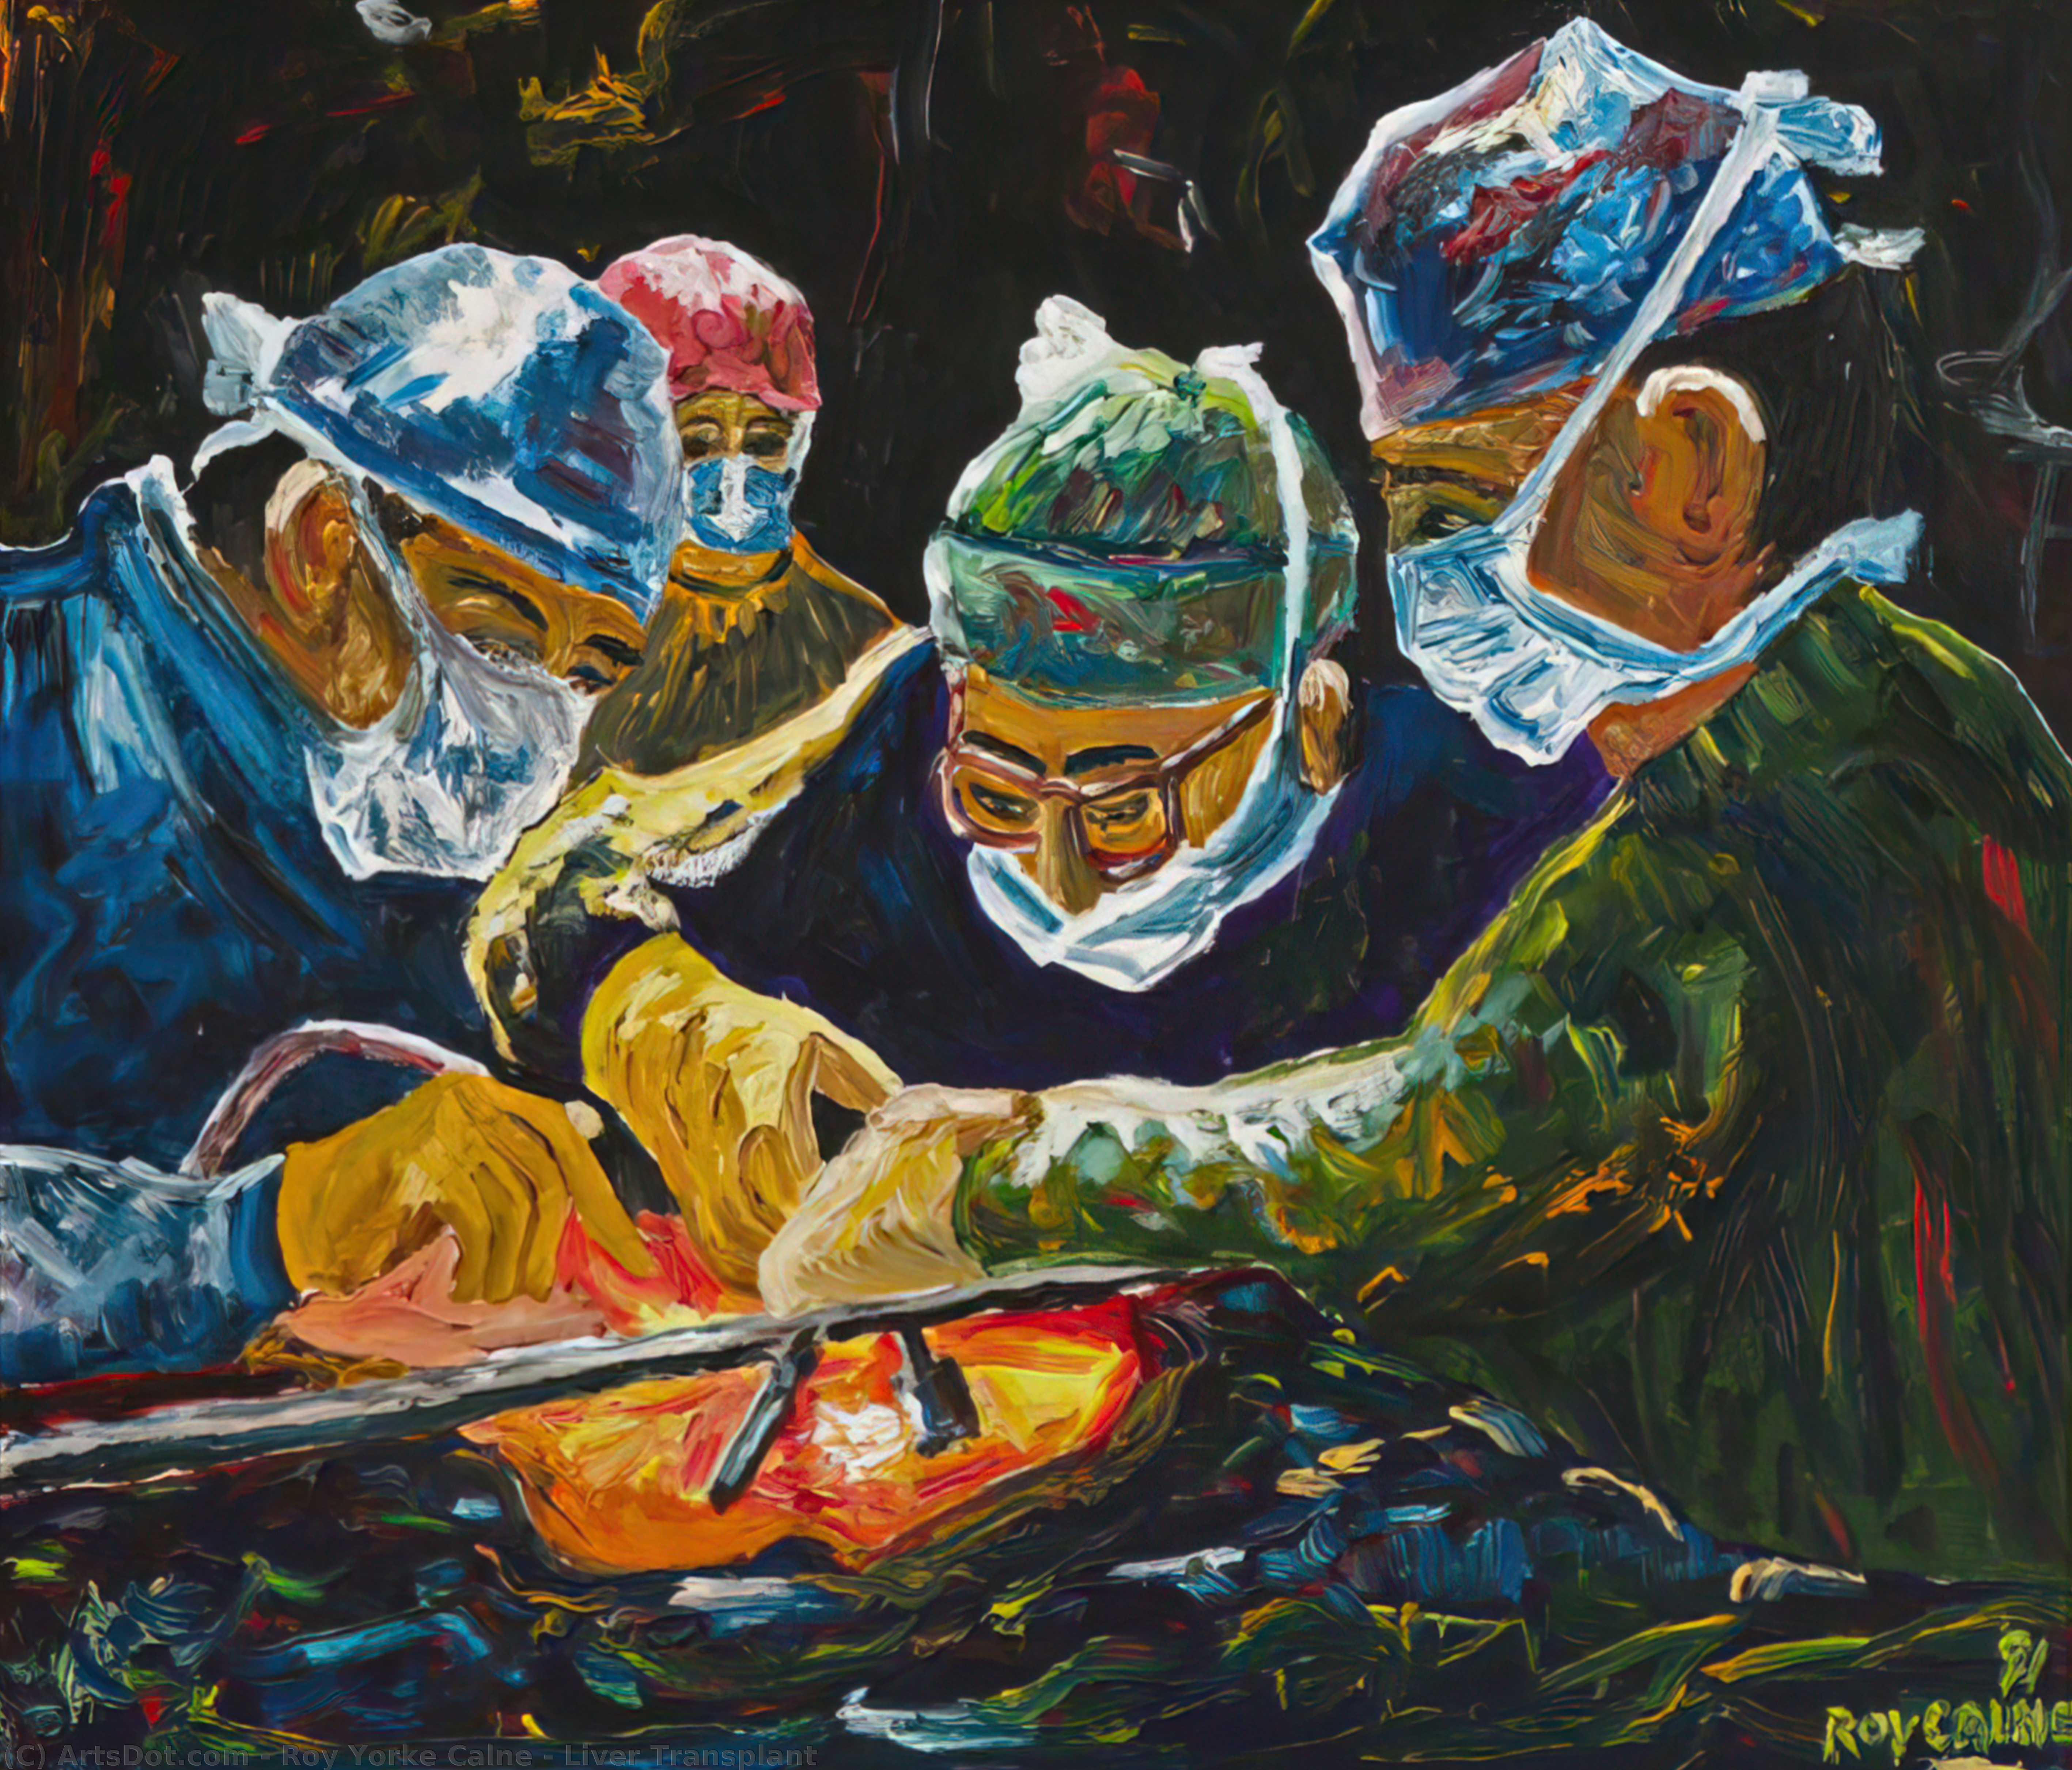 Liver Transplant, 1991 by Roy Yorke Calne Roy Yorke Calne | ArtsDot.com